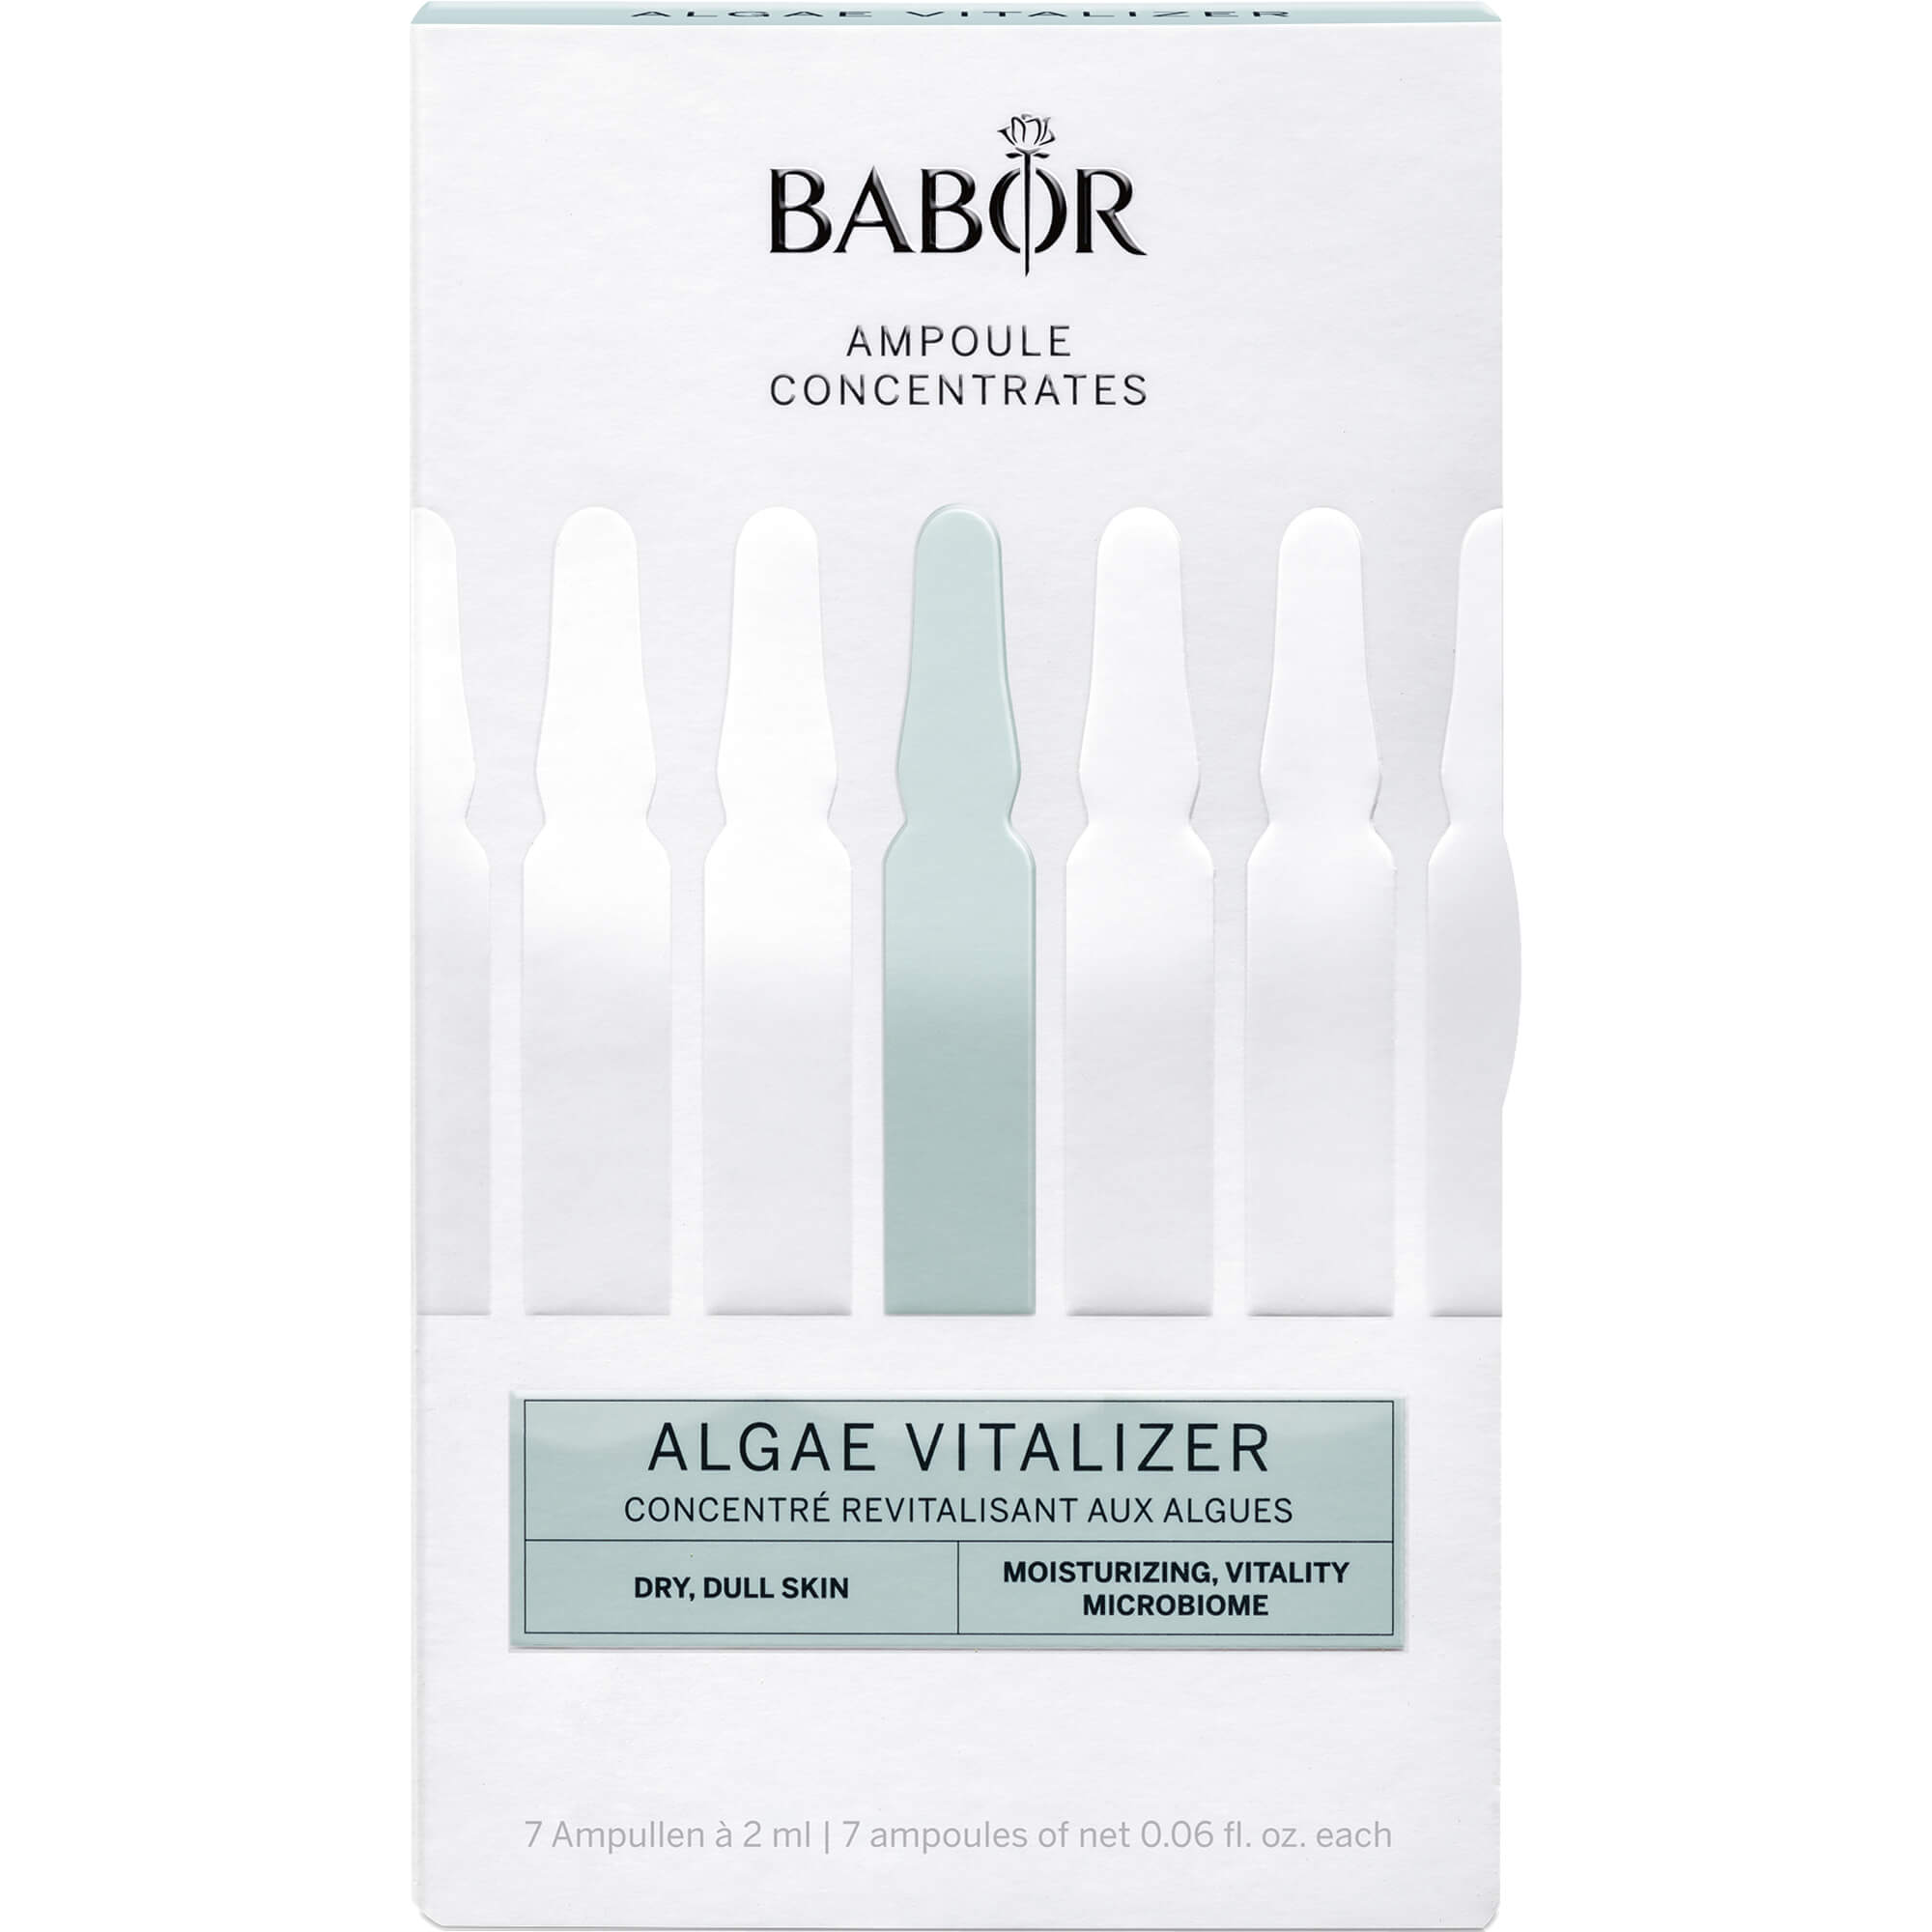 BABOR AMP.CONCENTR.Algae Vitalizer